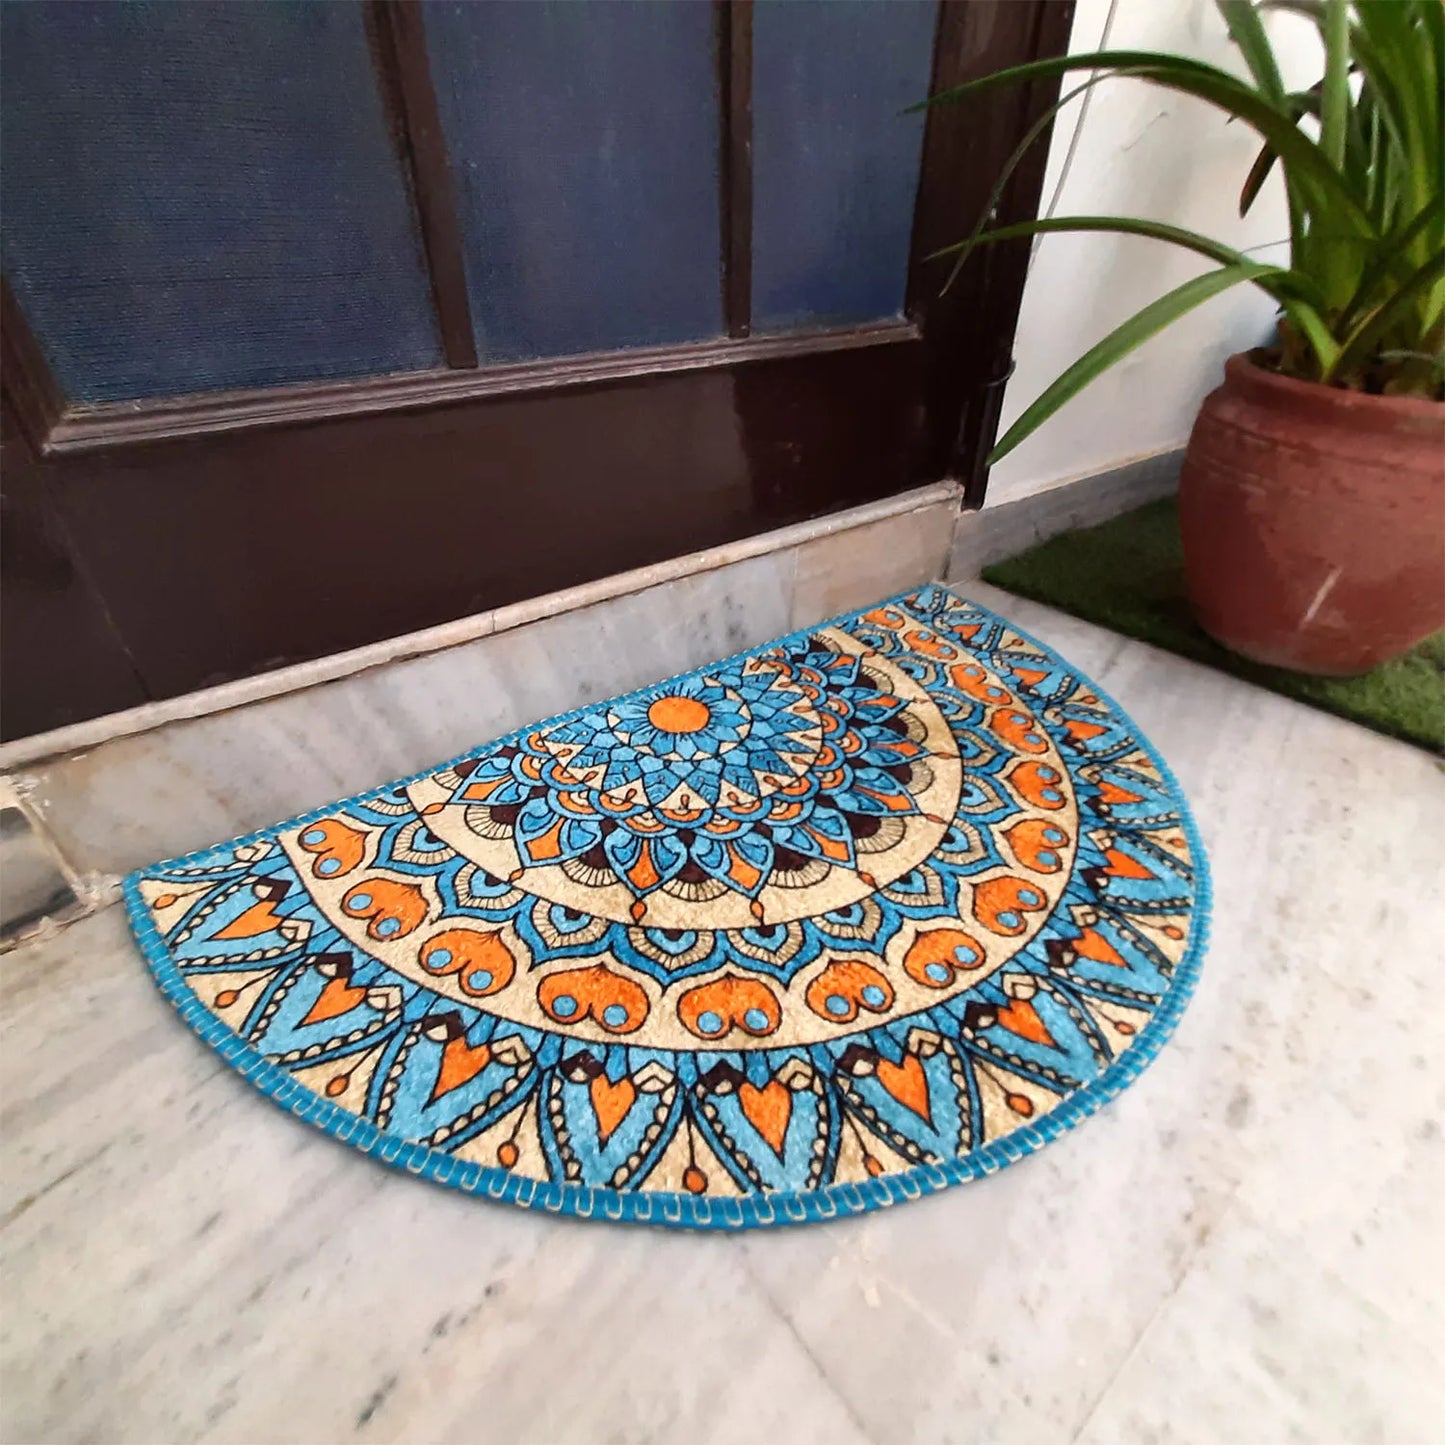 Avioni Home Floor Mats in Beautiful Blue Tone Rangoli Design – Anti Slip, Durable & Washable | Outdoor & Indoor